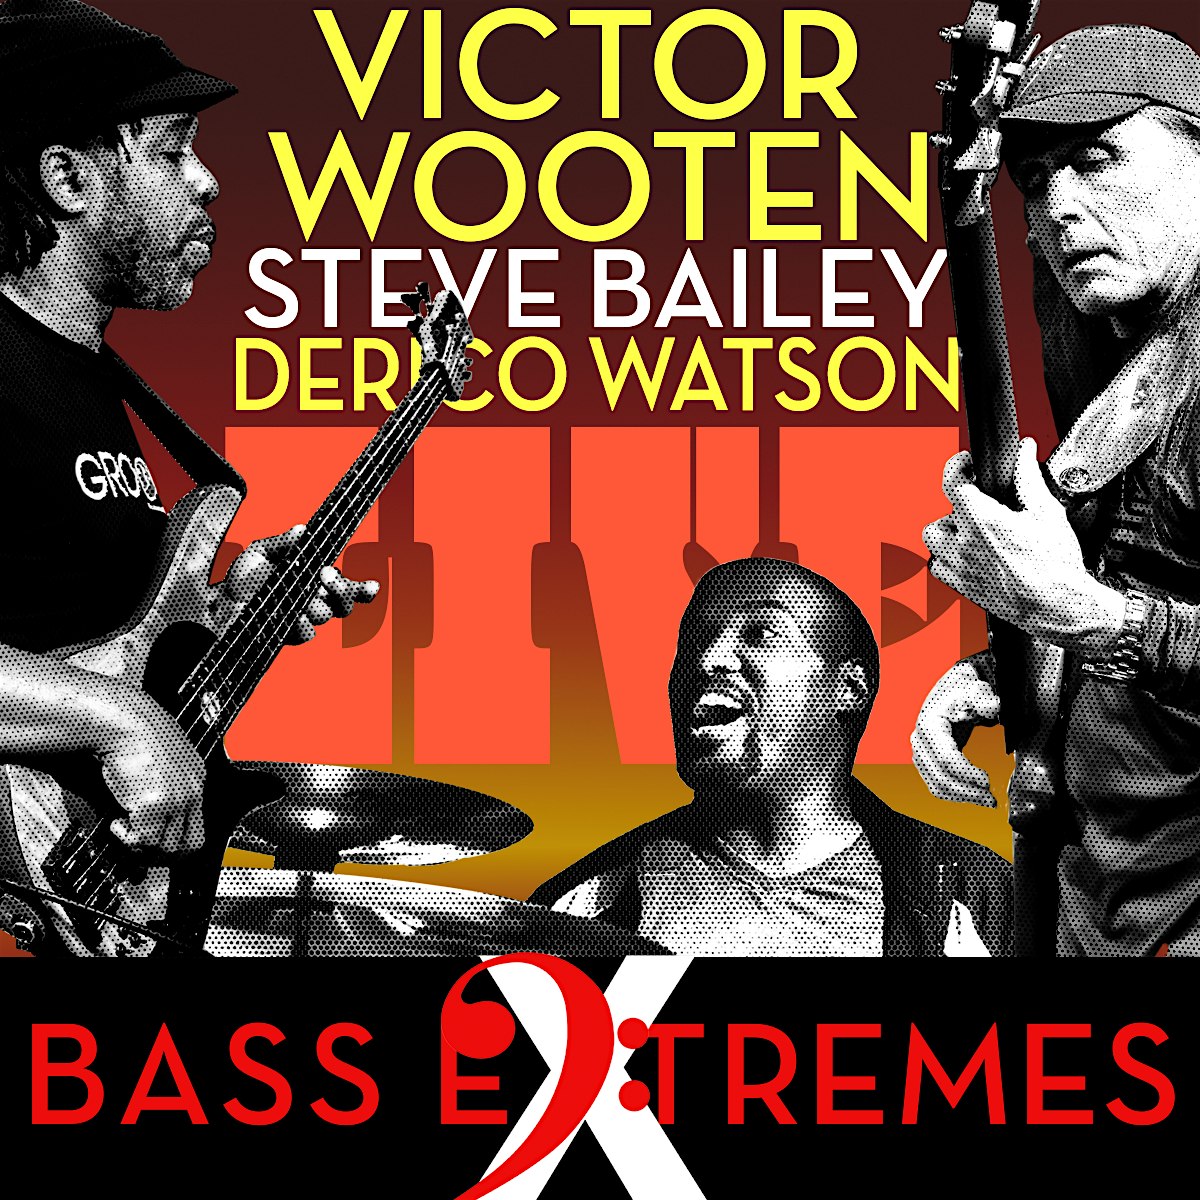 Victor Wooten – Steve Bailey & Derico Watson – BASS EXTREMES